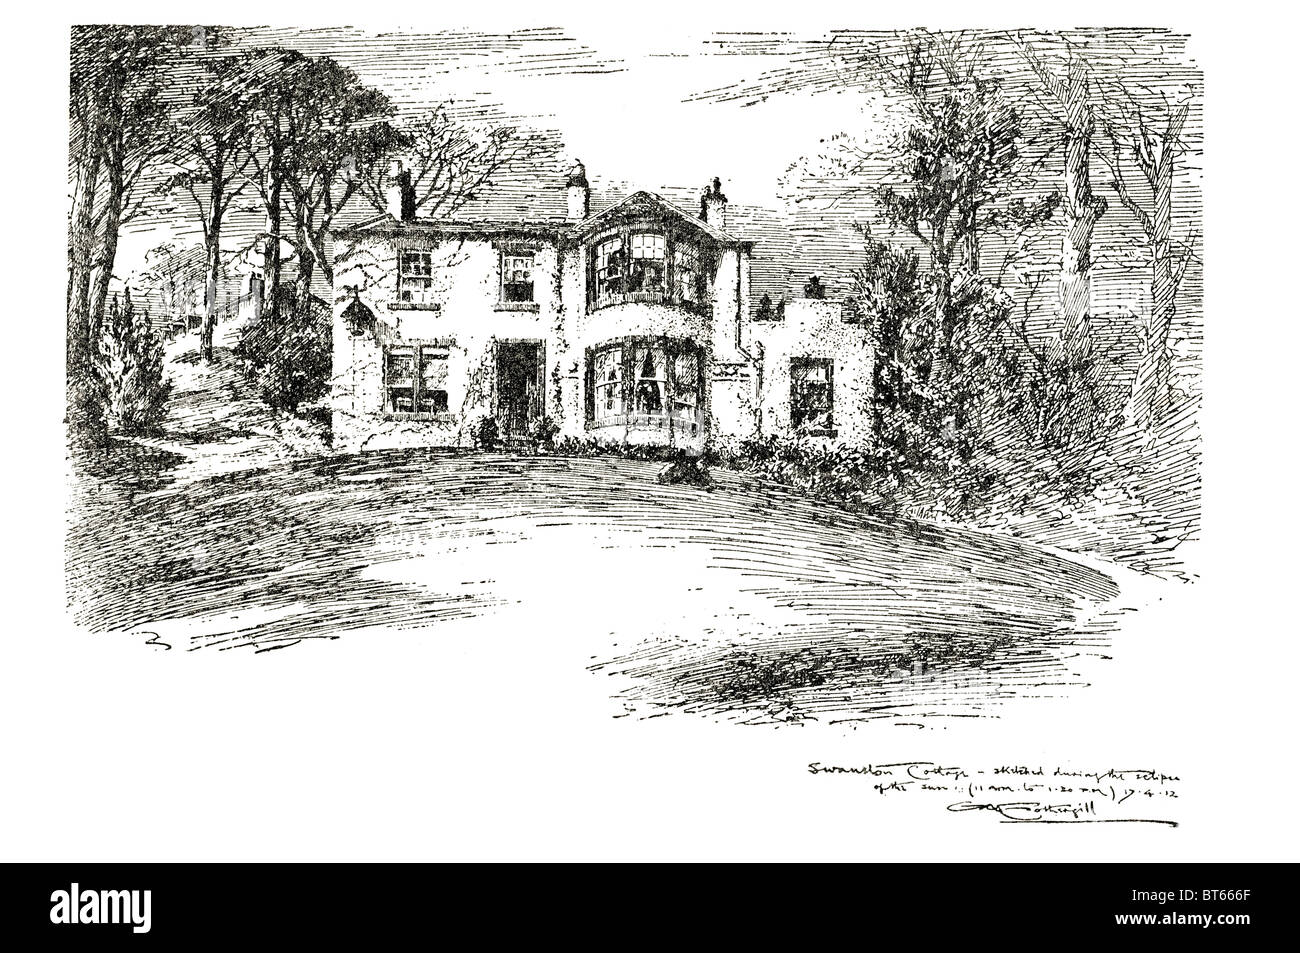 Swanston Cottage Robert Louis Stevenson Robert Louis Balfour Stock